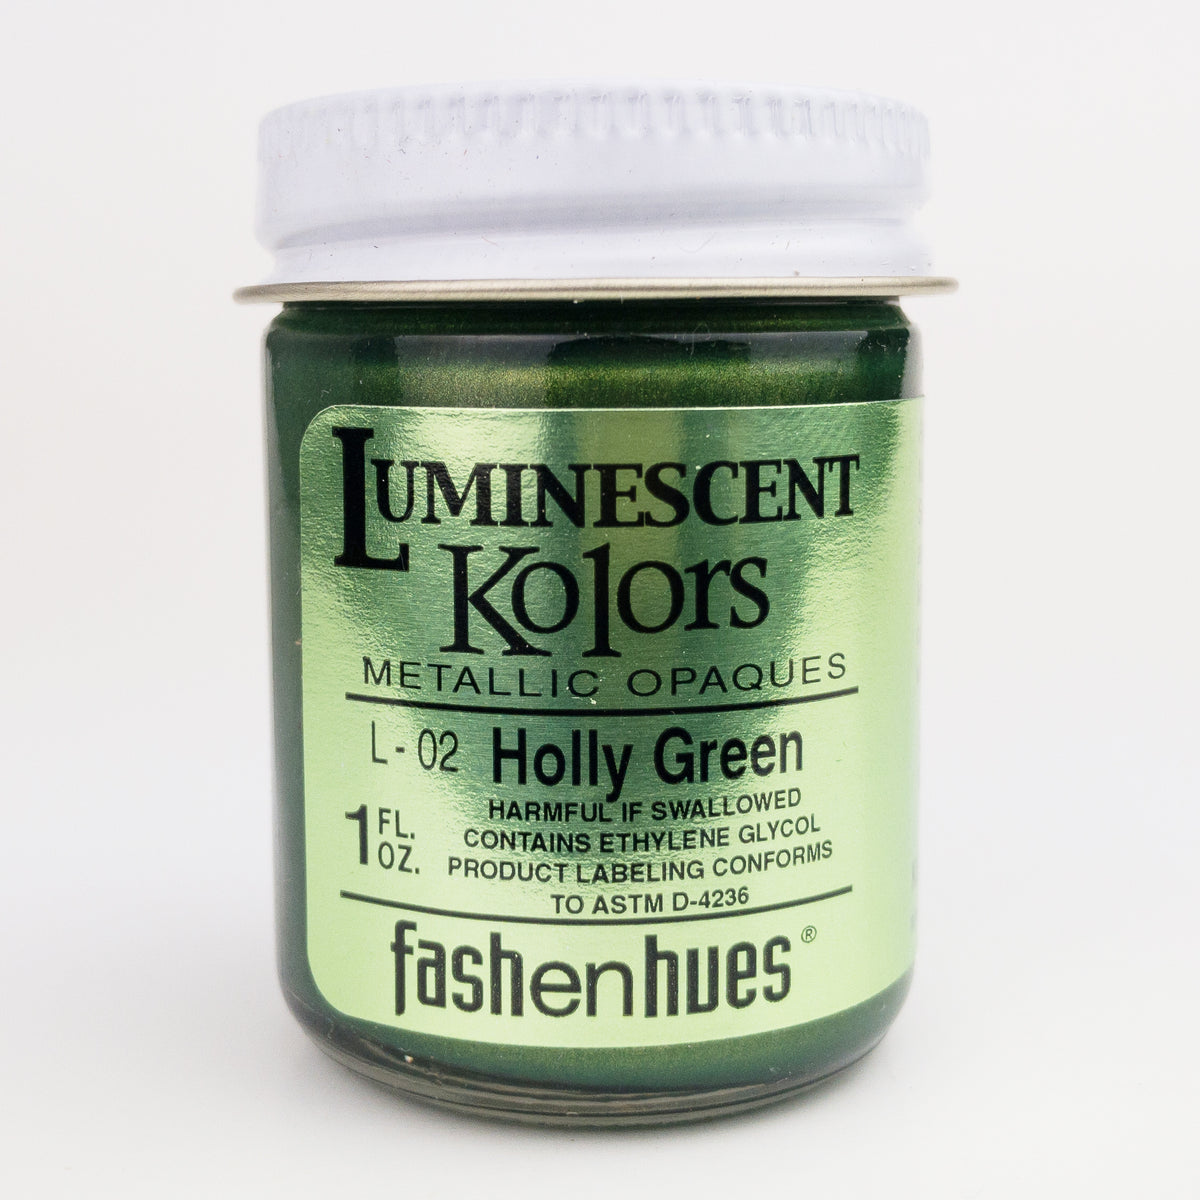 Luminescent_Kolors_L-02_Holly_Green_1